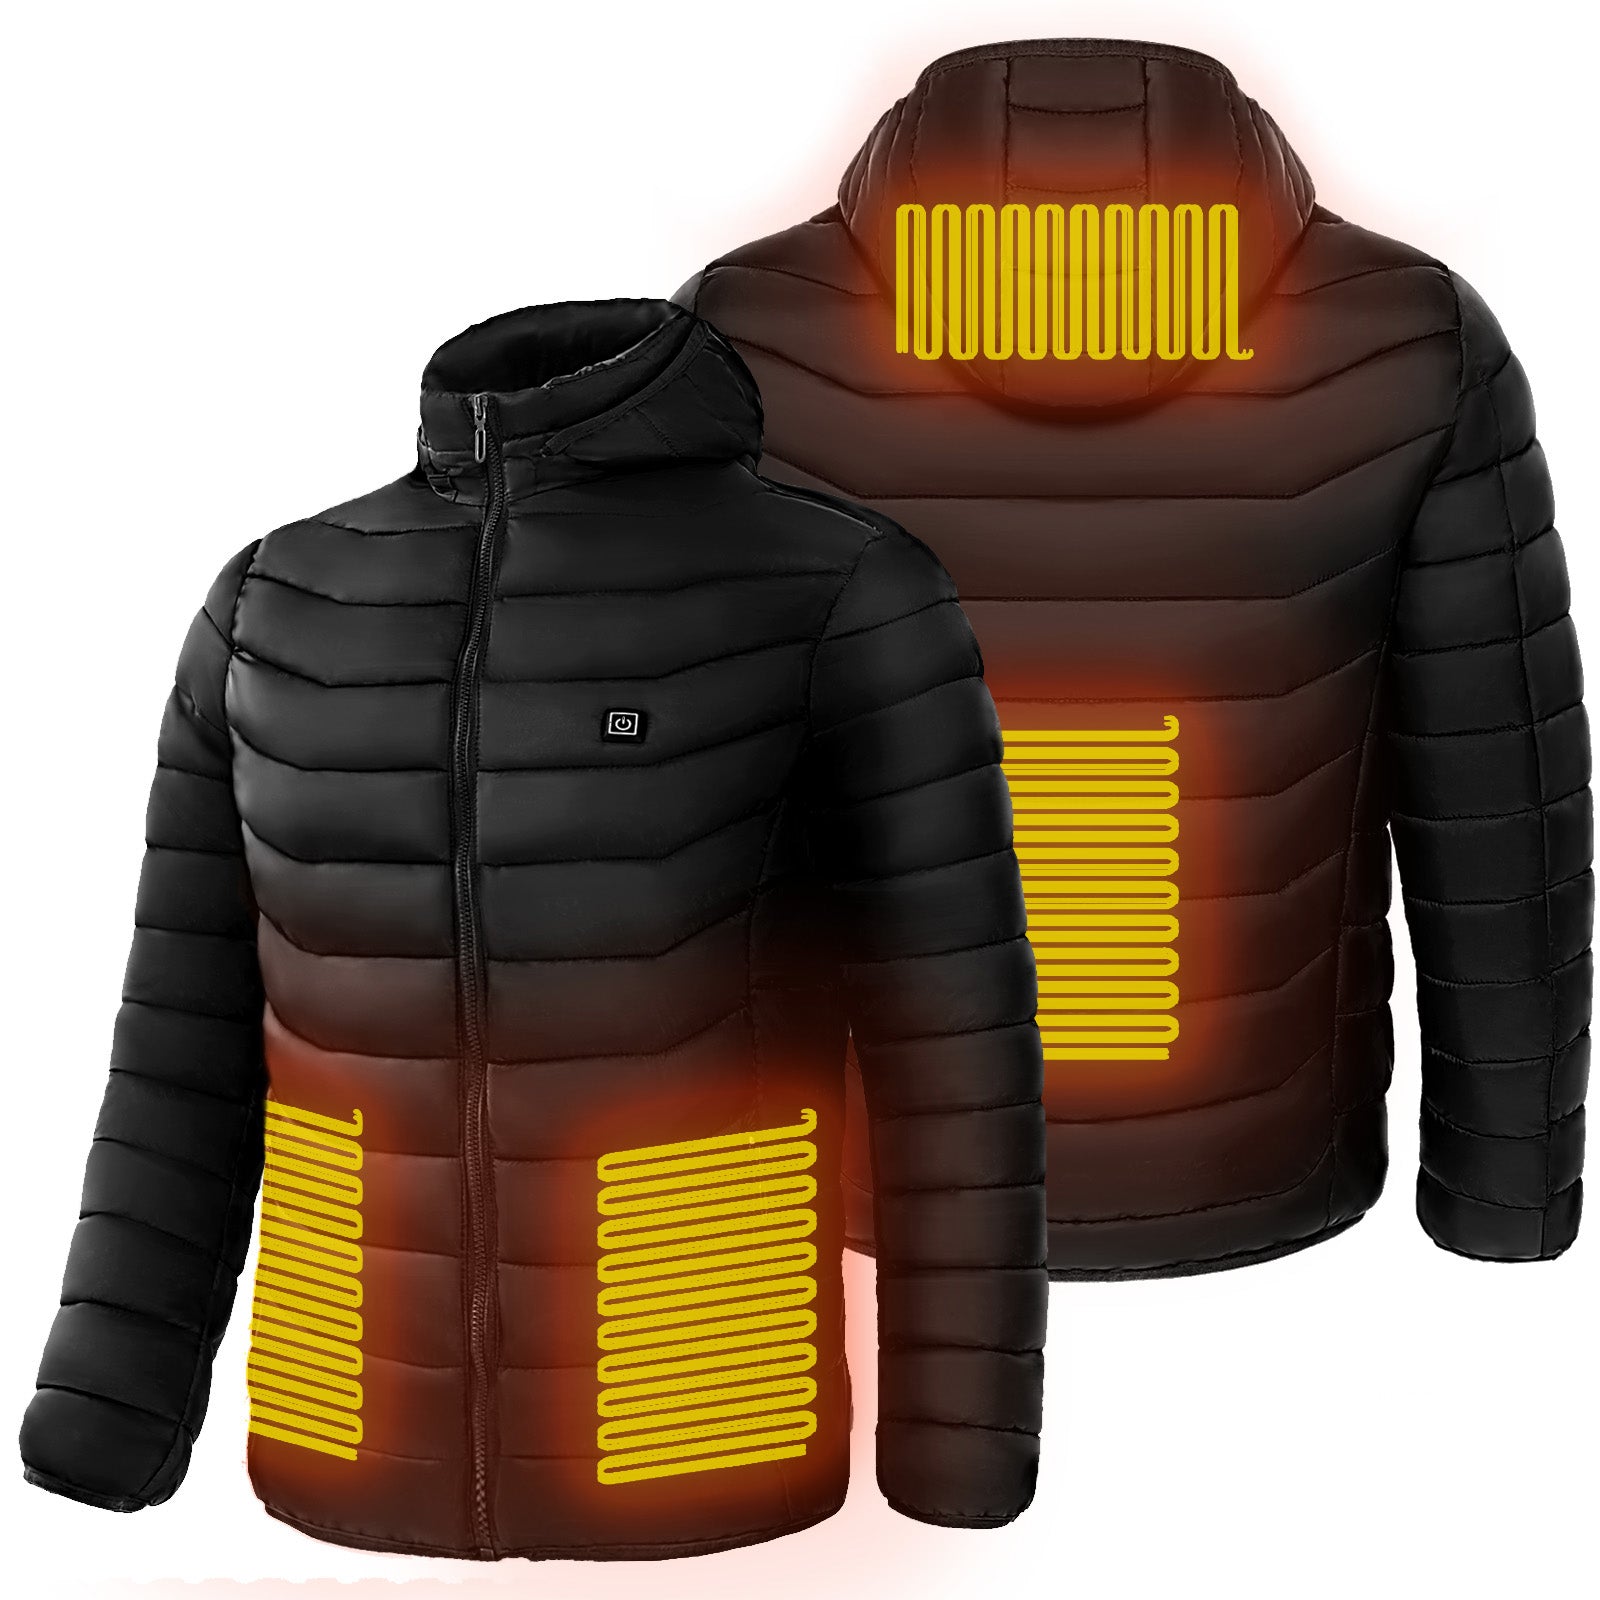 Men's Heated Hooded Jacket Electric Heating Windbreaker Hooded Jacket 9 Heat Zones